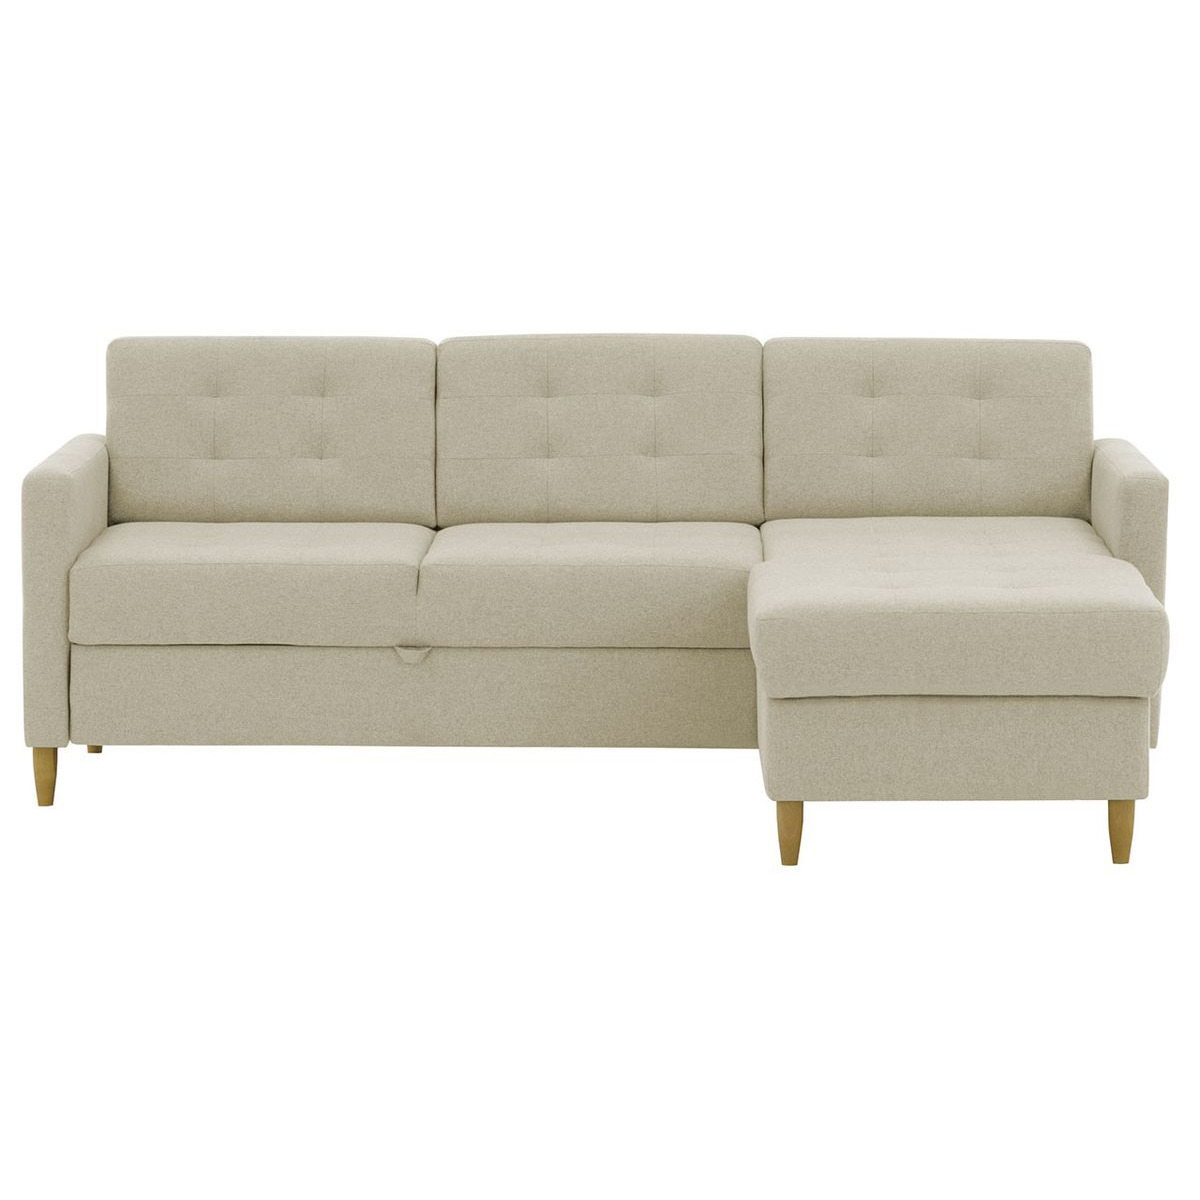 Explorer Corner Sofa Bed With Storage, lime - image 1